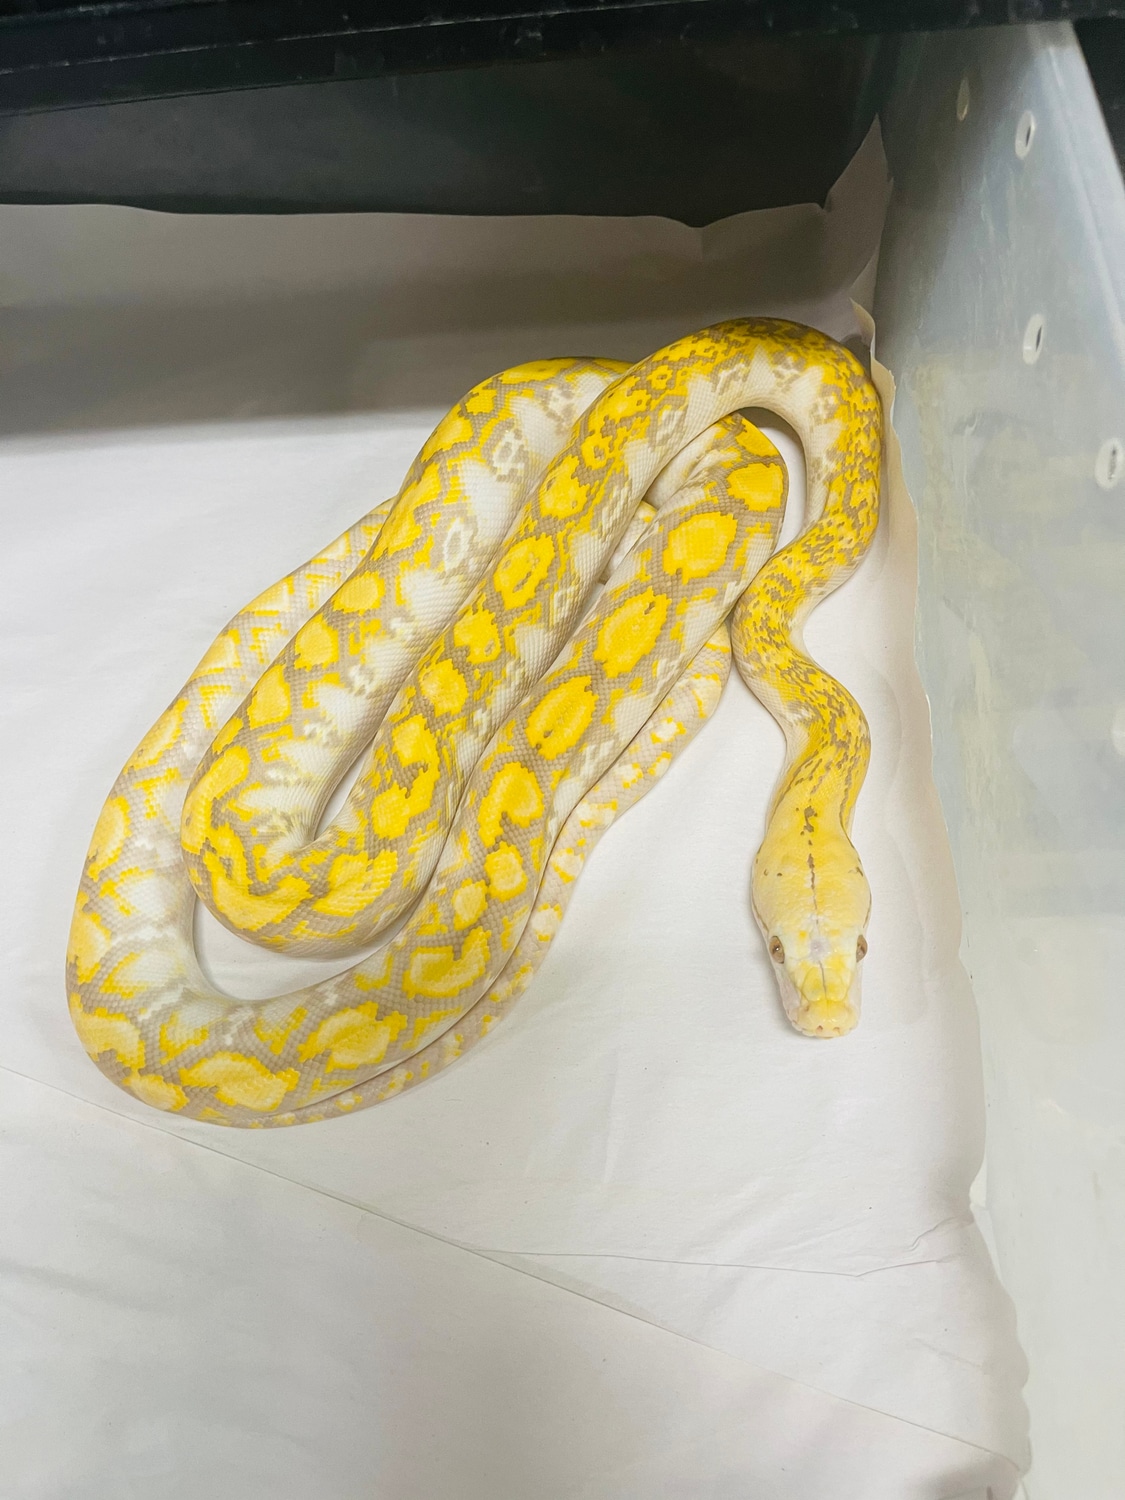 50% Kalatoa Purple Poss Het Snow Reticulated Python by Revered Retics